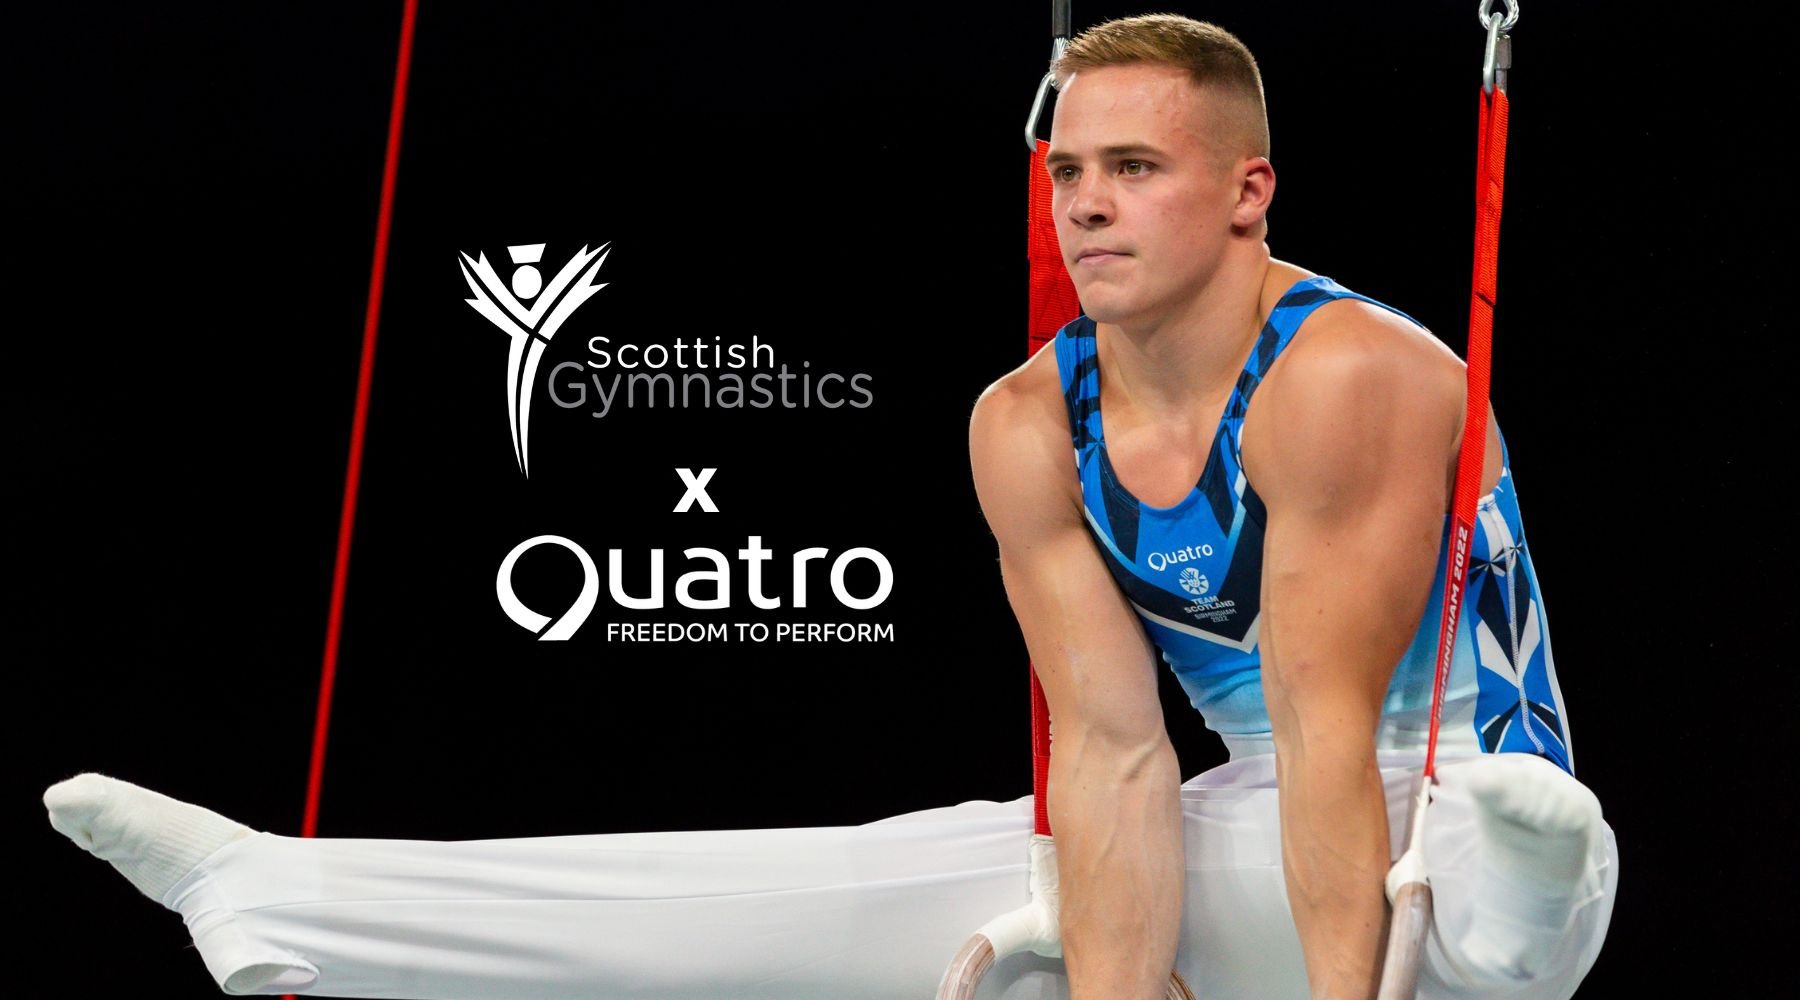 Quatro Gymnastics and Scottish Gymnastics are delighted to announce a four-year partnership extension - Quatro Gymnastics UK